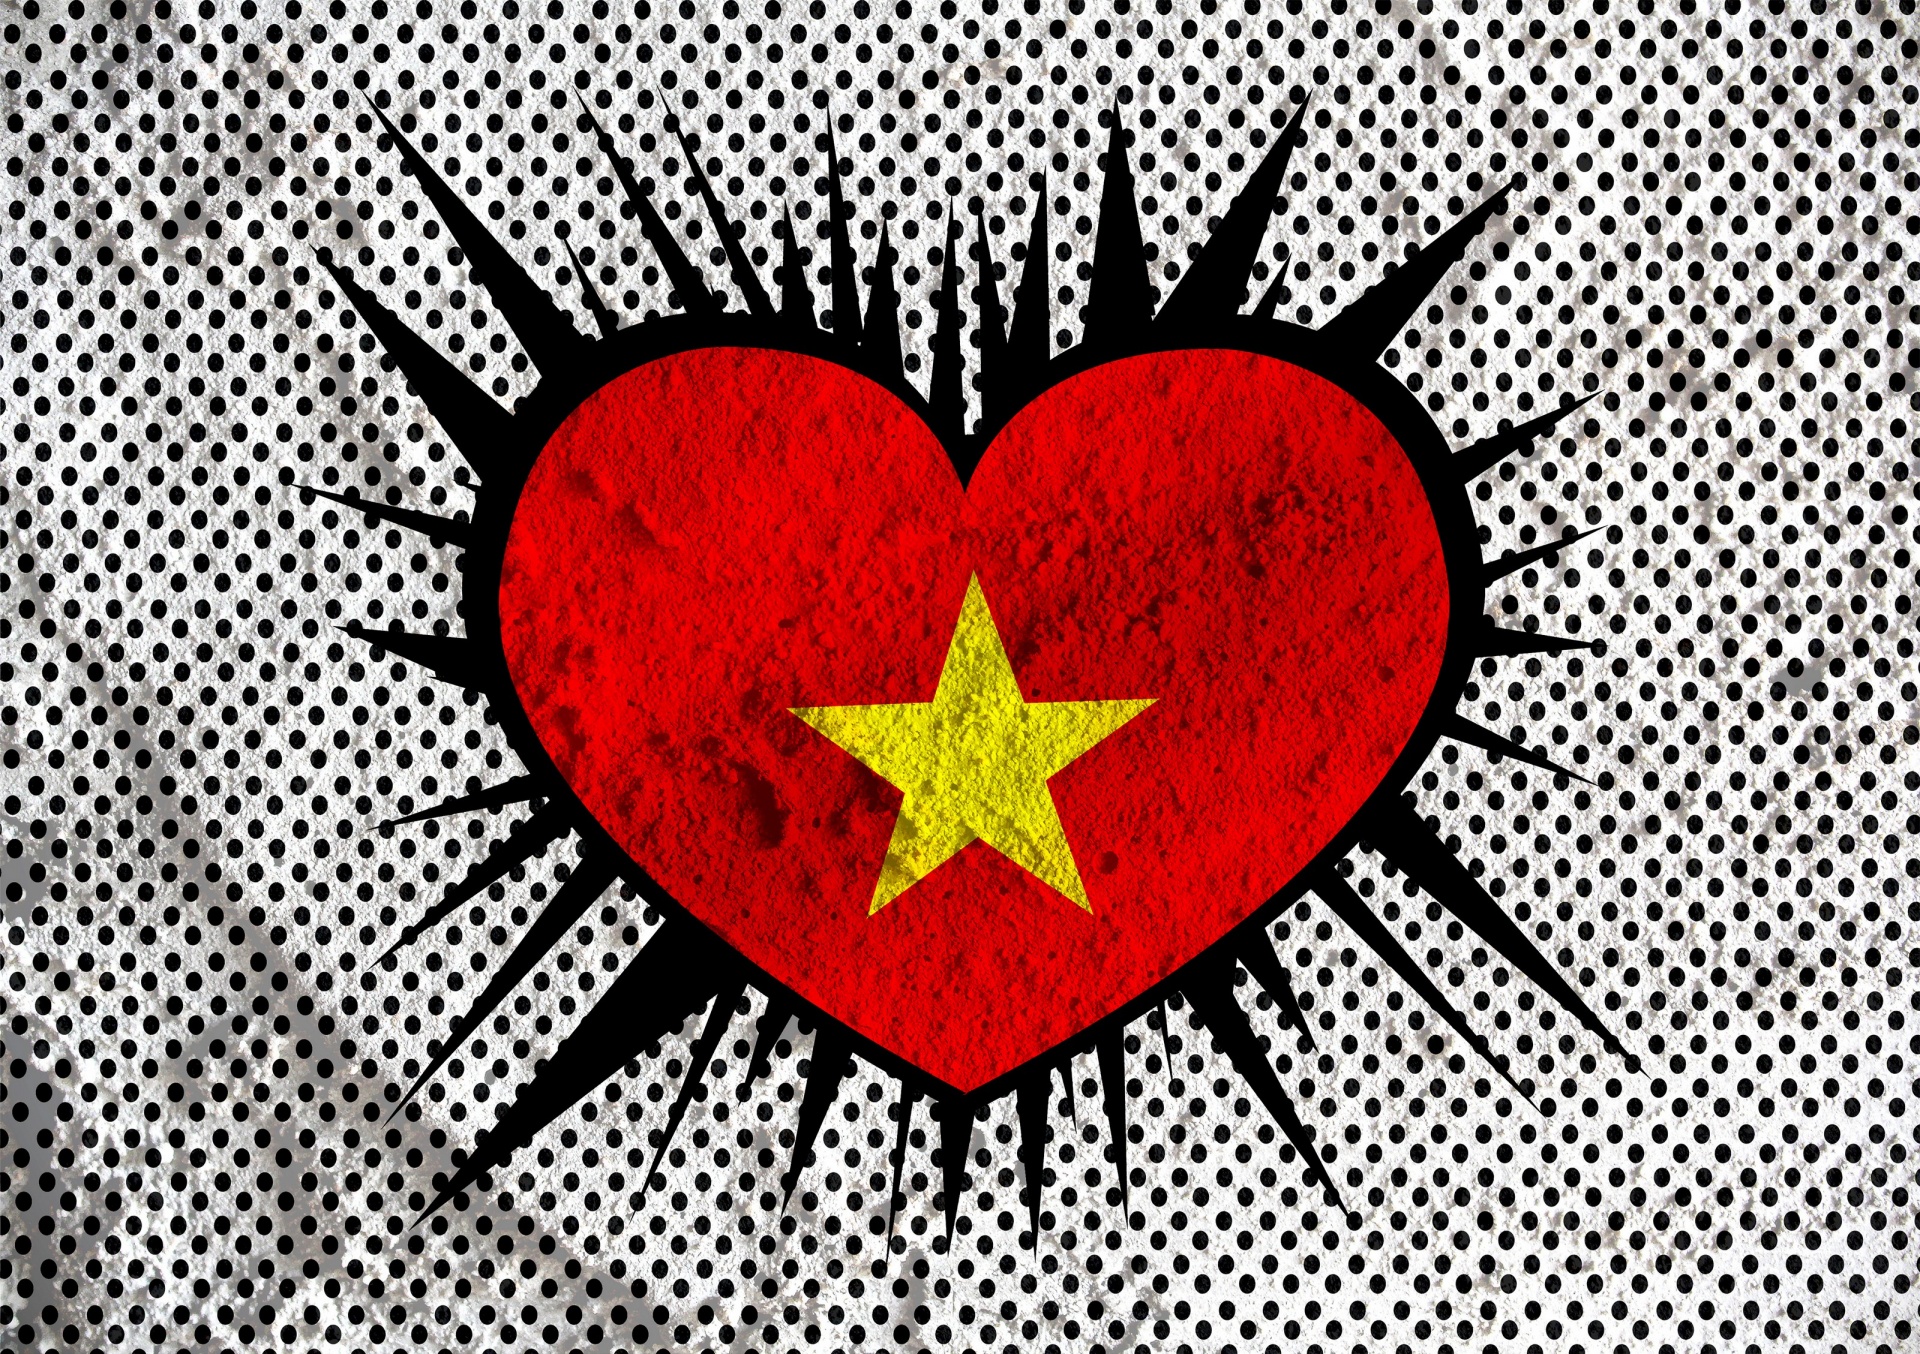 Flag Of Vietnam Themes